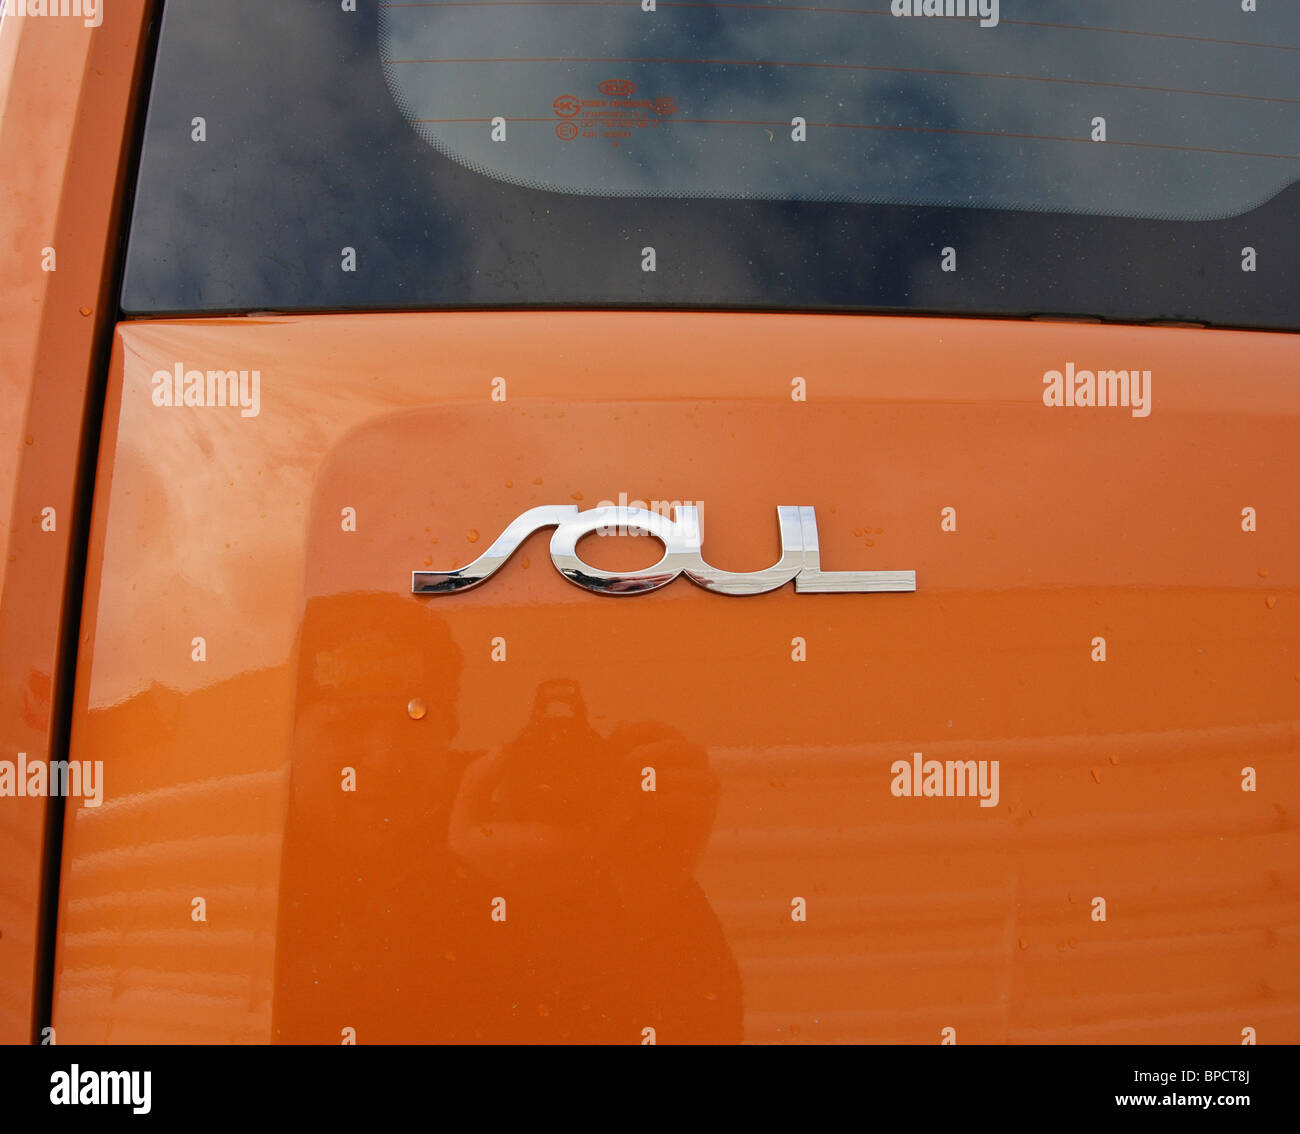 Kia Soul 1.6 - MY 2008 - orange - Korean popular subcompact mini van car, small MPV - Soul's logo, badge, emblem Stock Photo